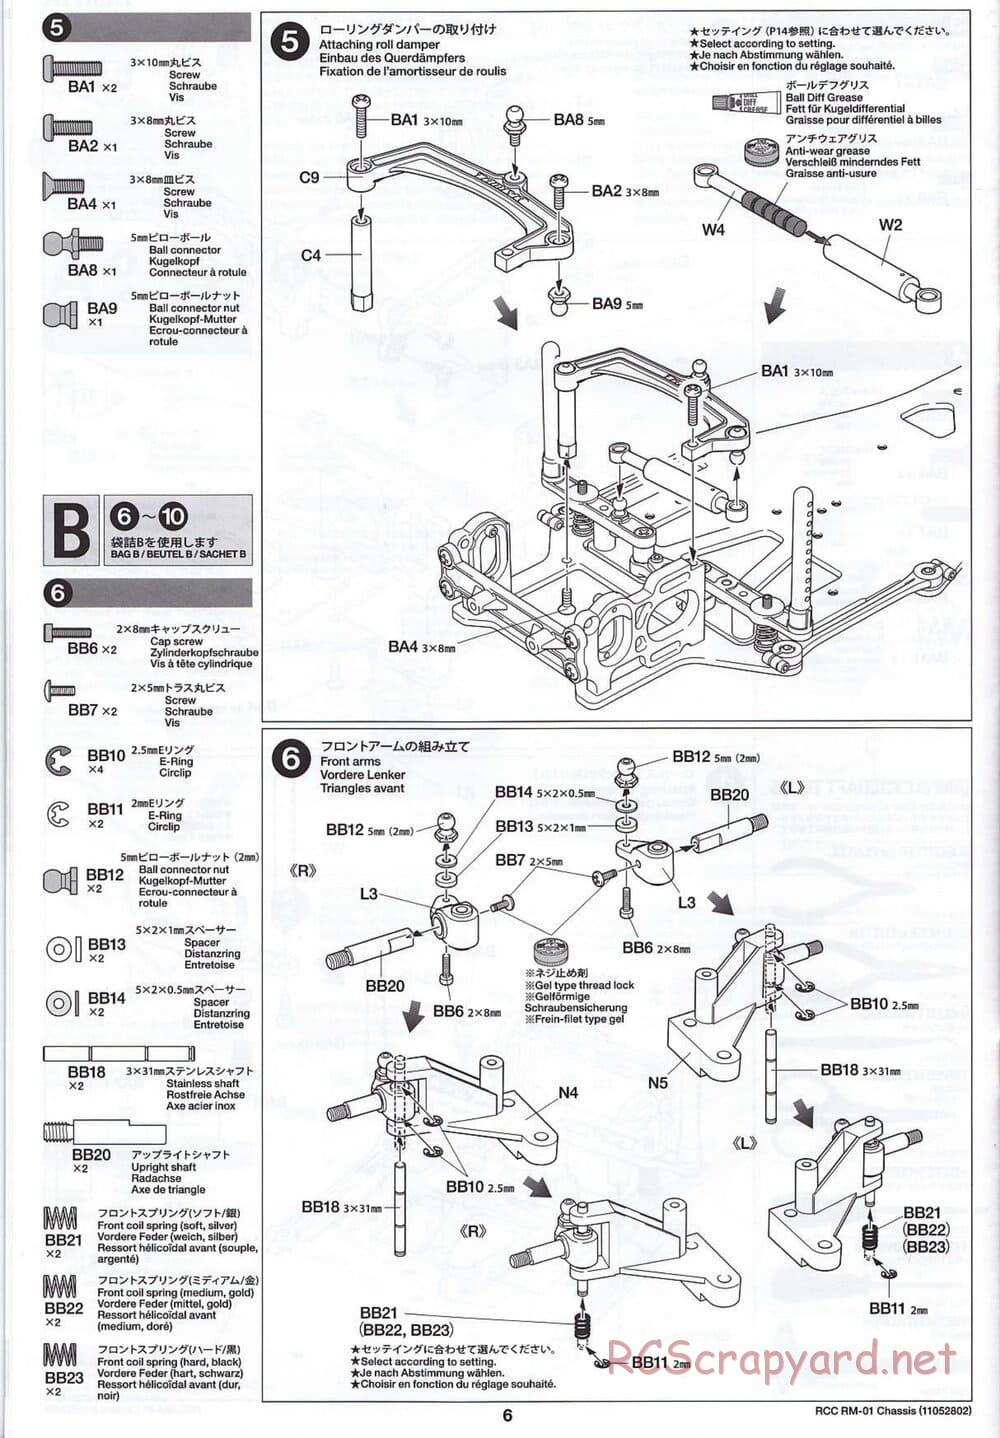 Tamiya - RM-01 Chassis - Manual - Page 6